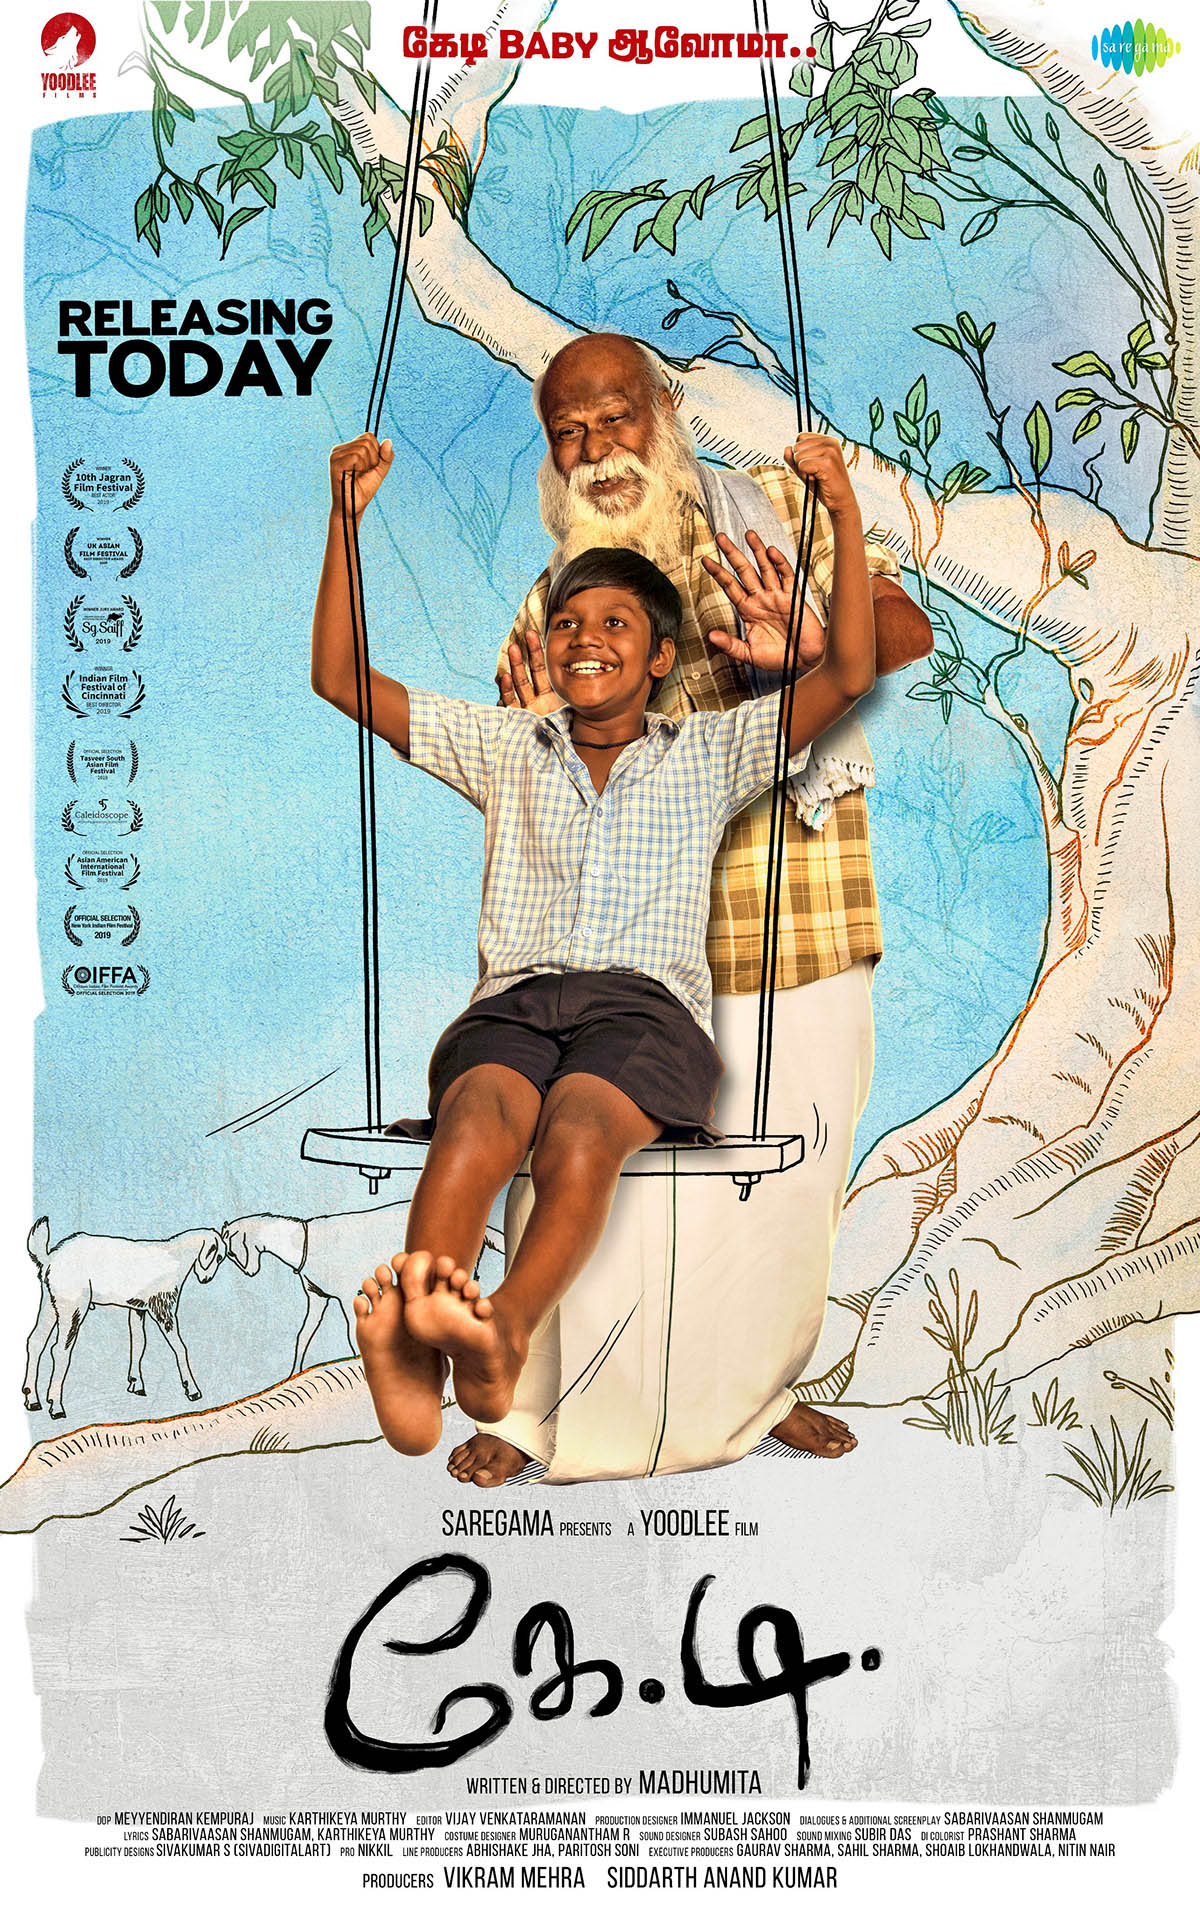 india movie poster design kd